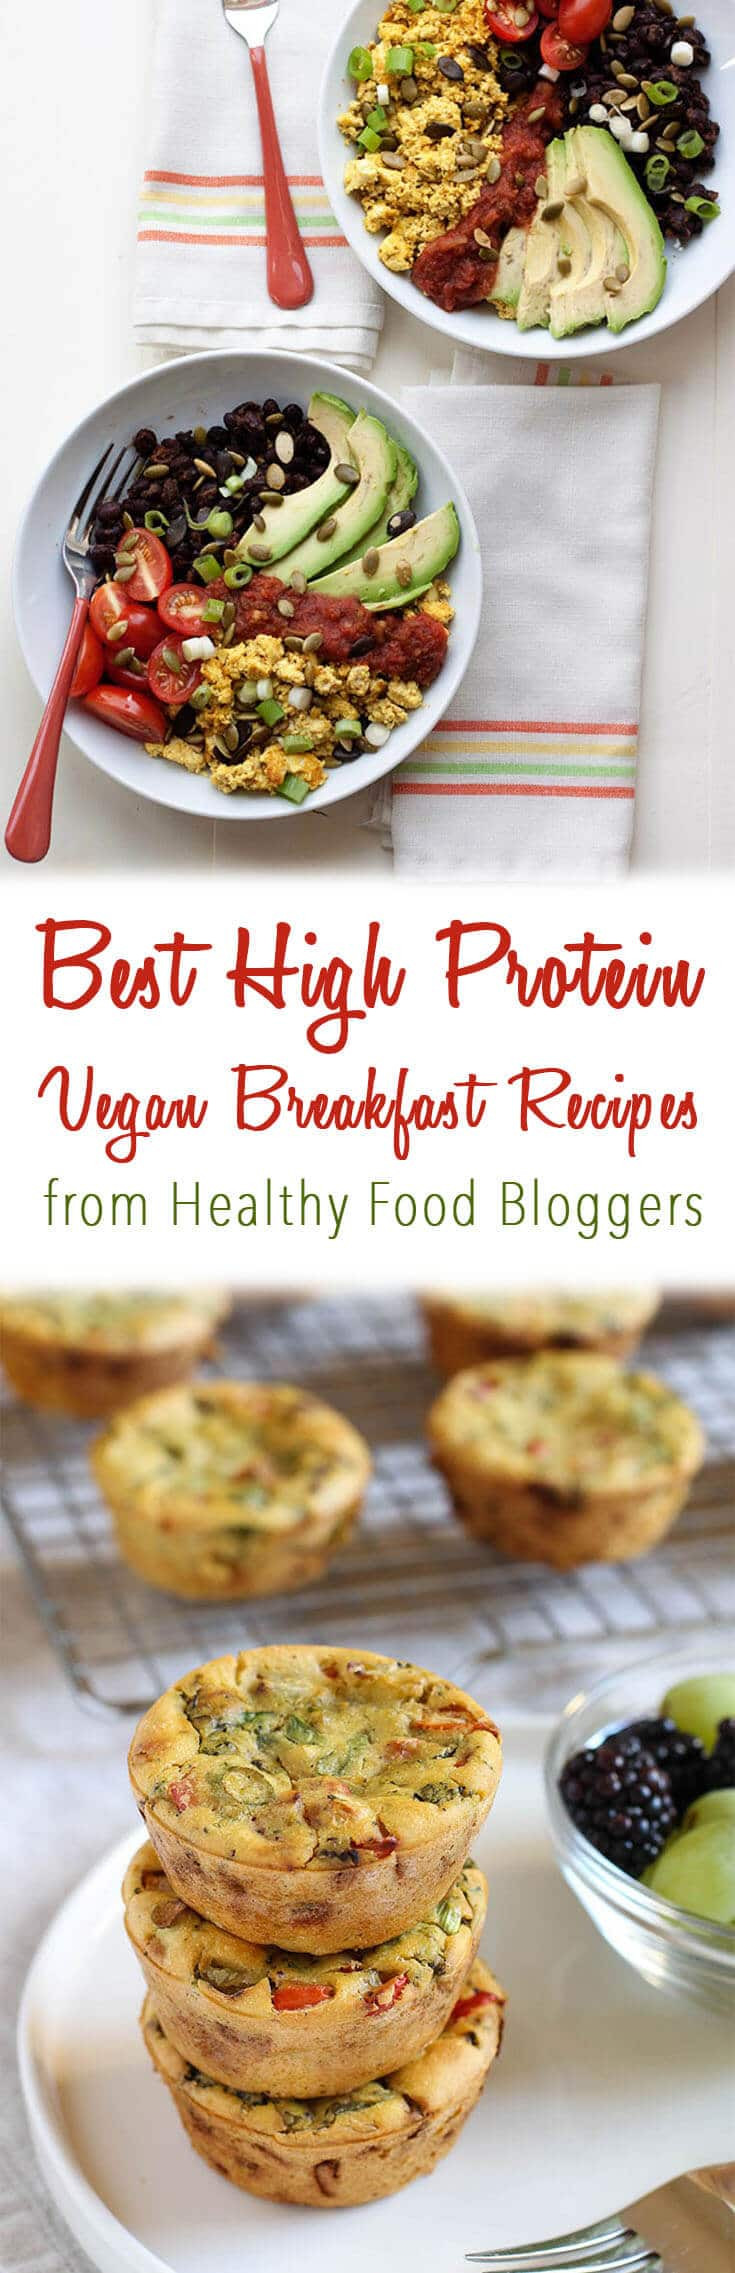 Vegan Breakfast Videos
 Best High Protein Vegan Breakfast Recipes from Healthy